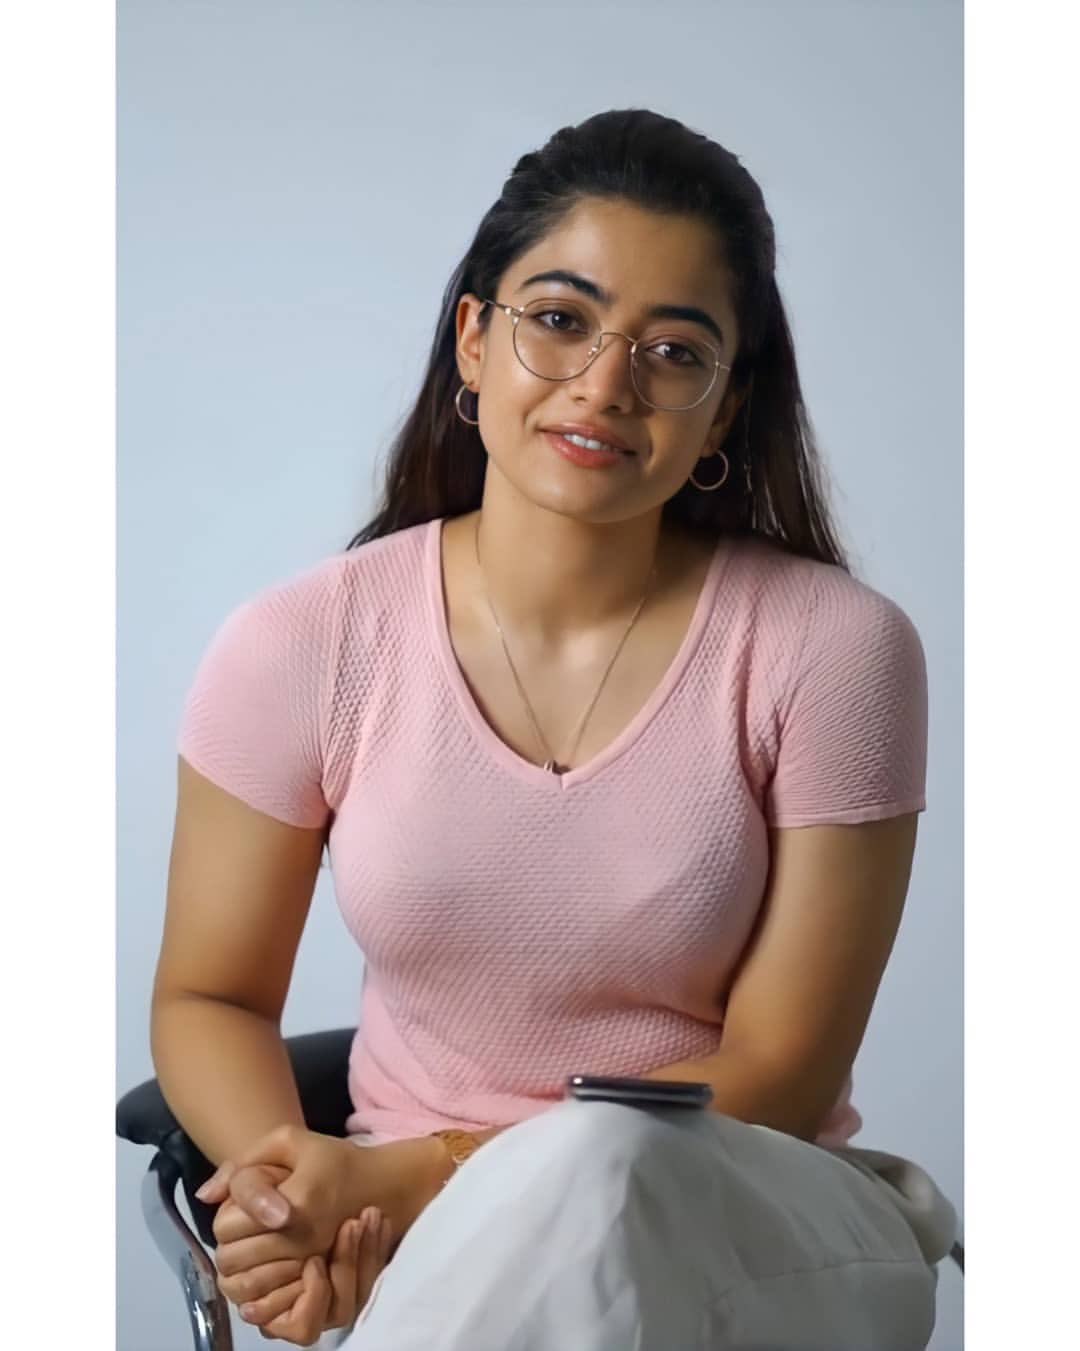 Rashmika Mandanna looking hot in pink T-shirt and glasses